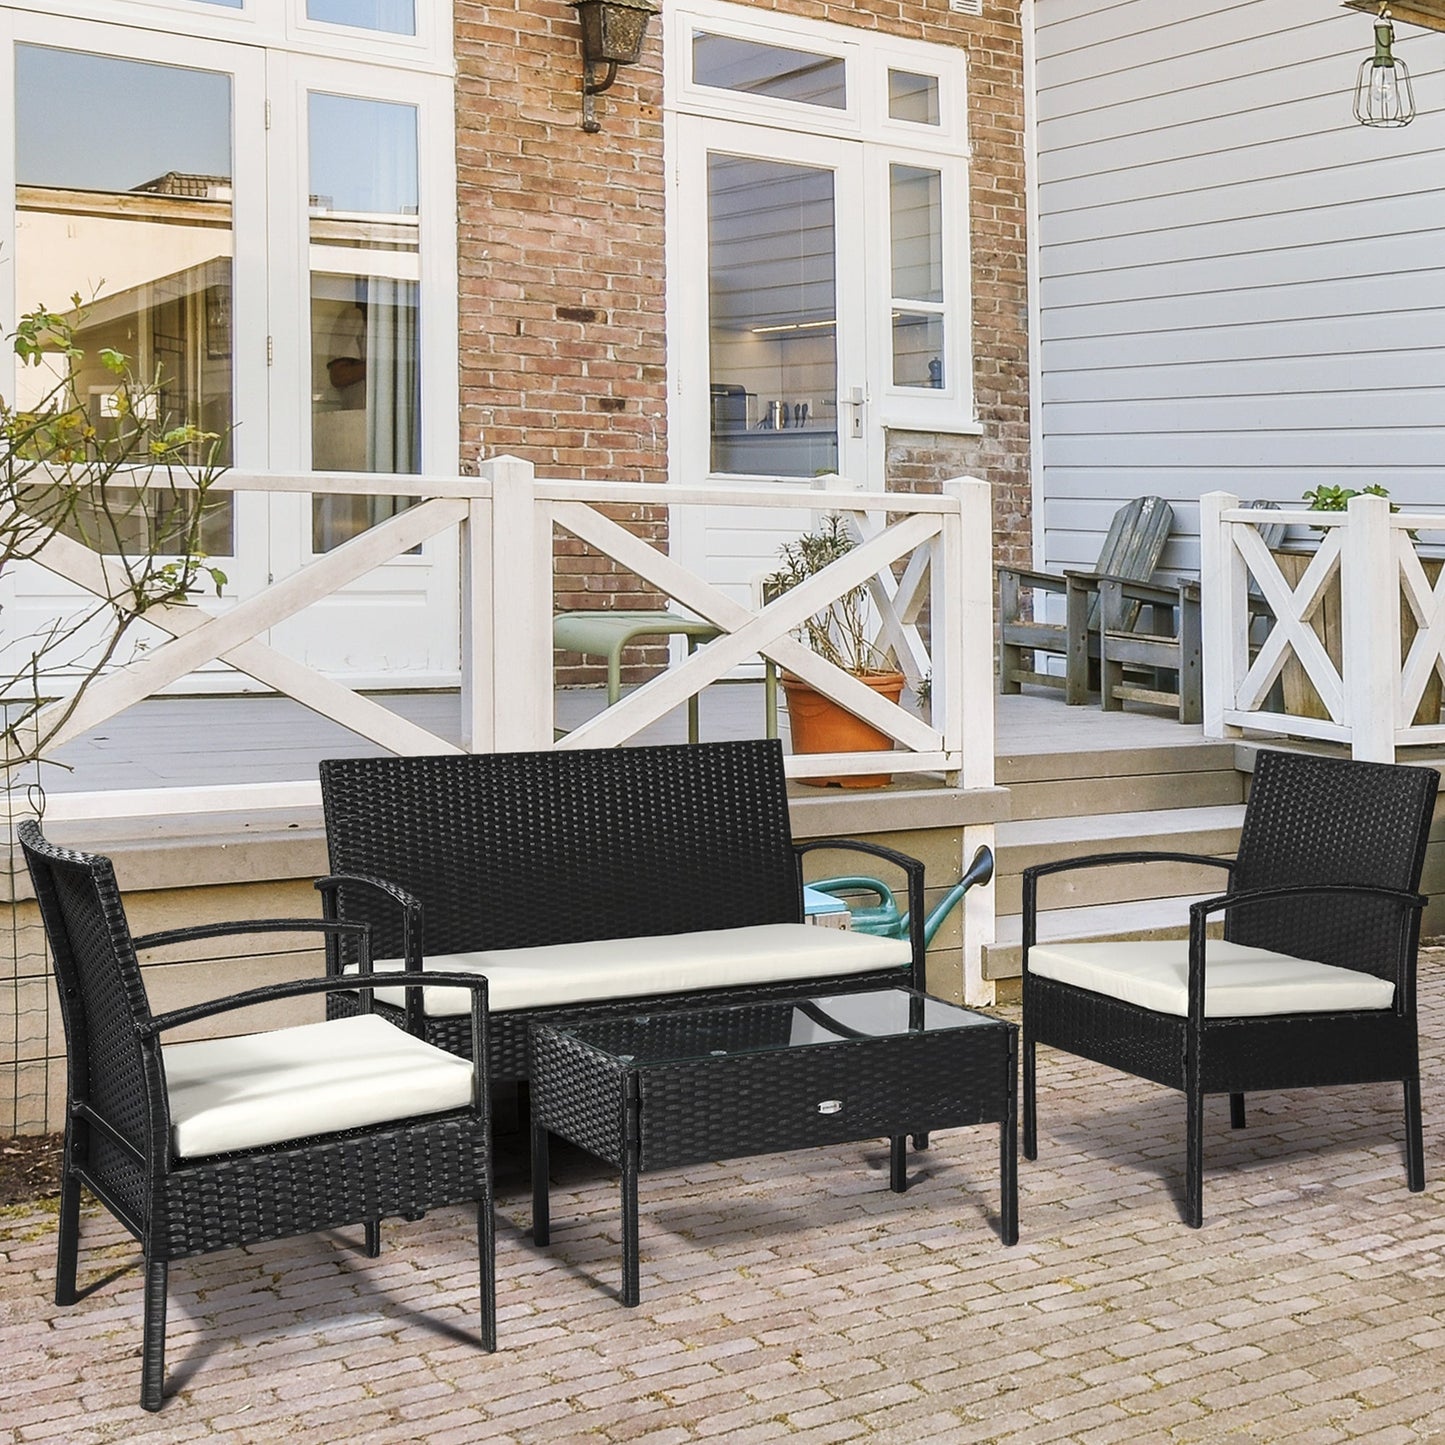 Outsunny Rattan Garden Lounge Set: 4-Seater Wicker Sofa & Table, Outdoor Patio Furniture, Monochrome Black & Cream